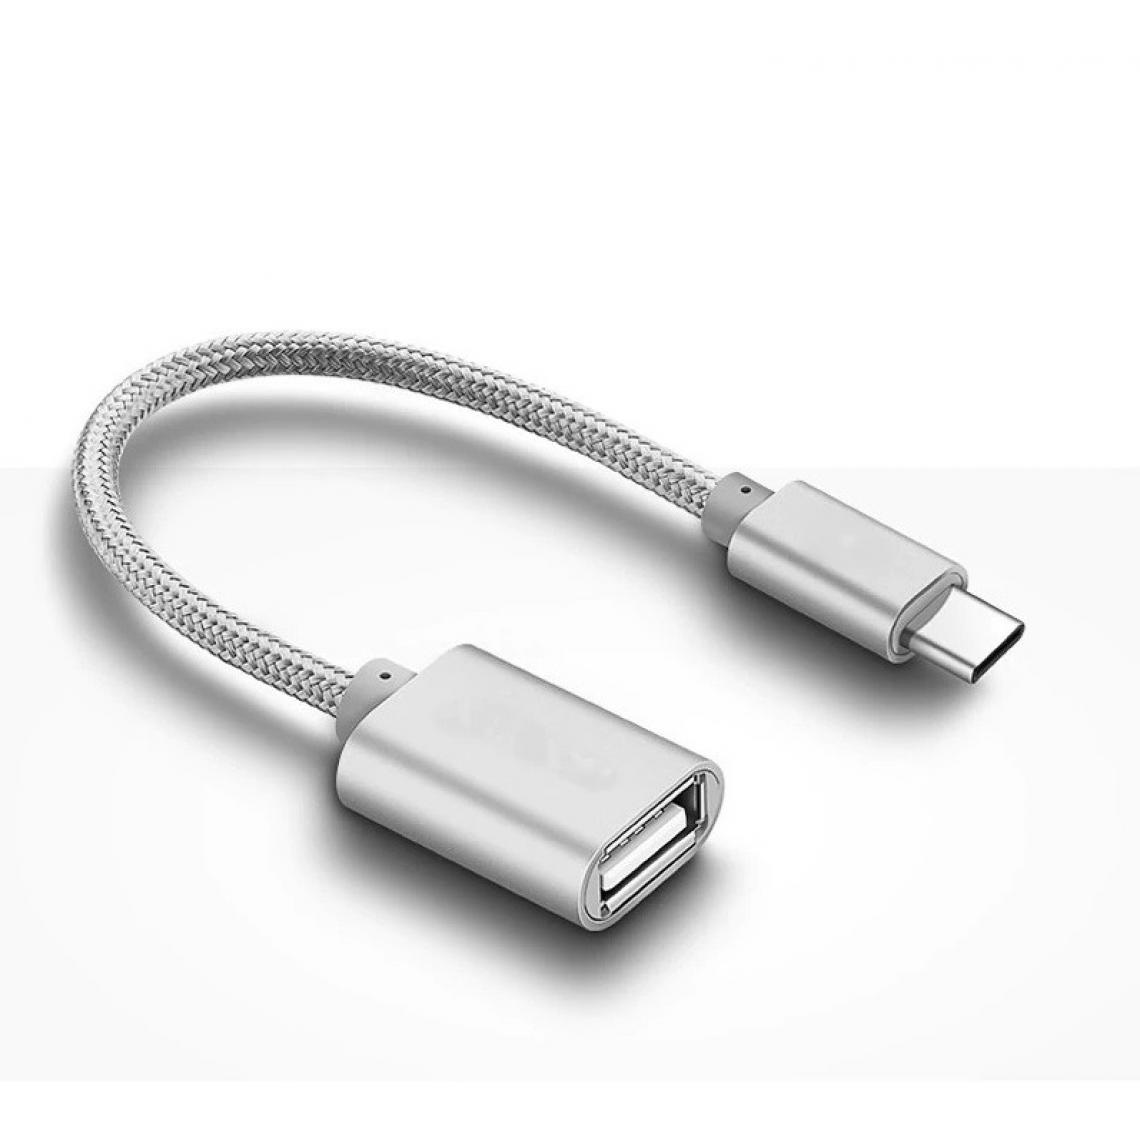 Shot - Adaptateur Type C/USB pour SONY Xperia XA1 Smartphone & MAC USB-C Clef (ARGENT) - Autres accessoires smartphone